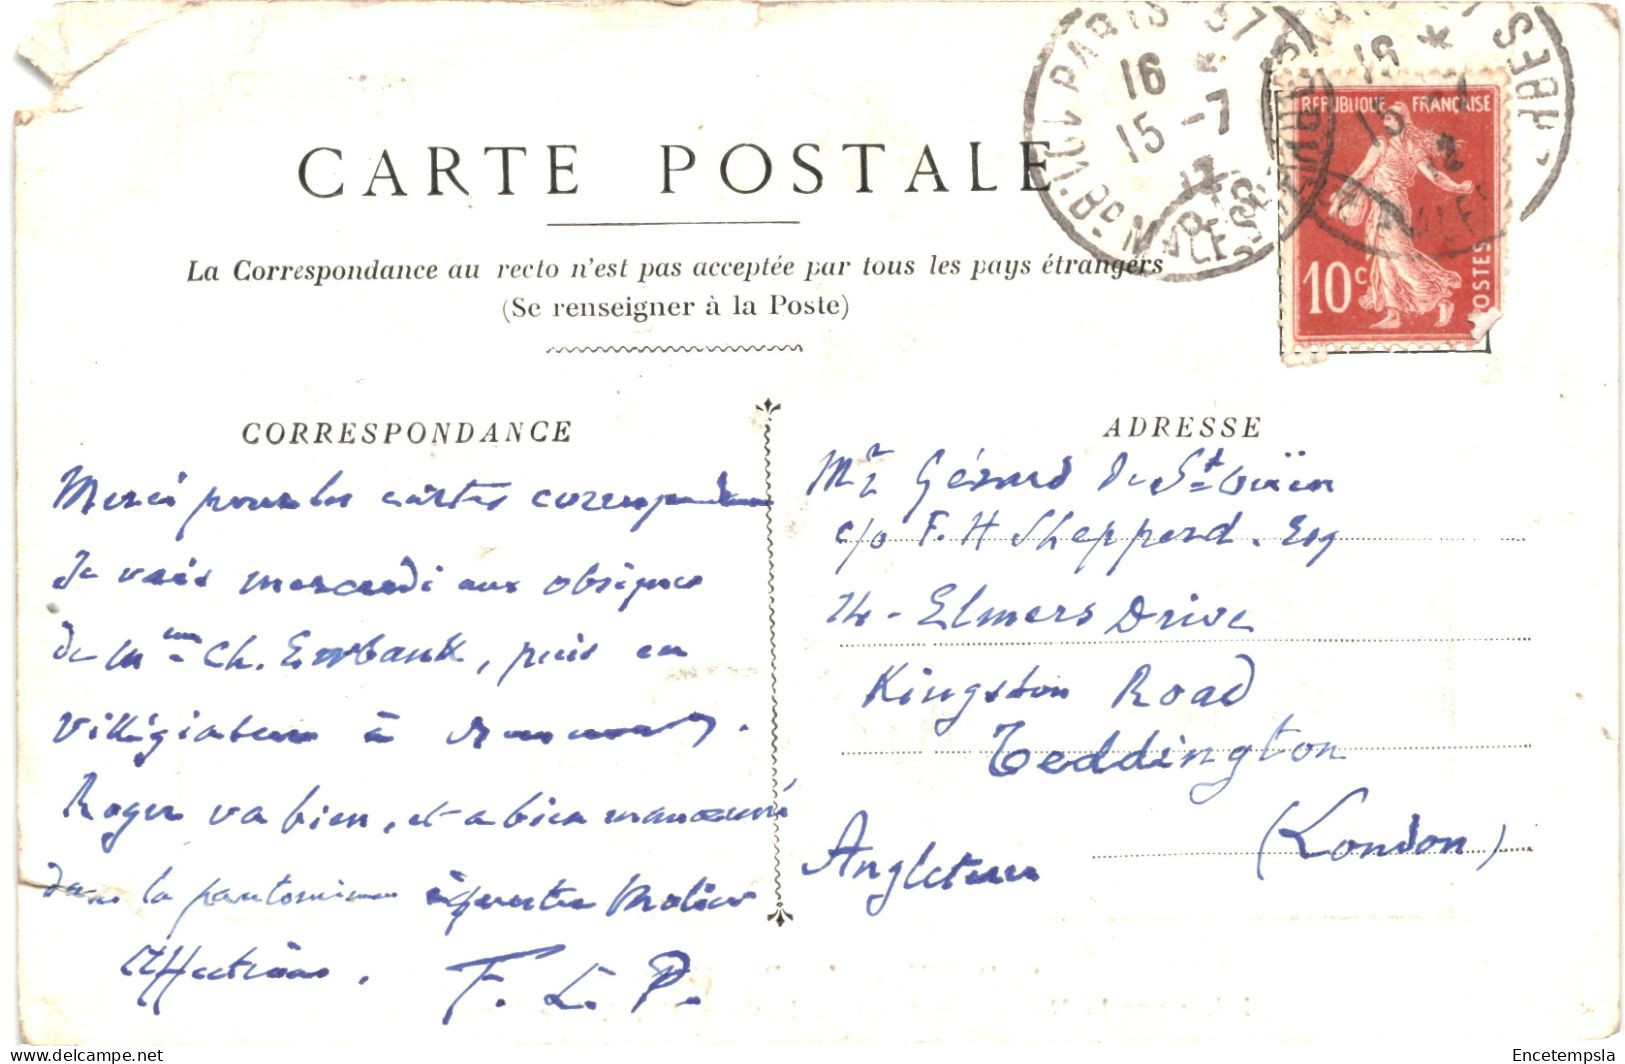 CPA Carte Postale France Le Bas Meudon Illustration De Pavy 1912 VM80863 - Meudon